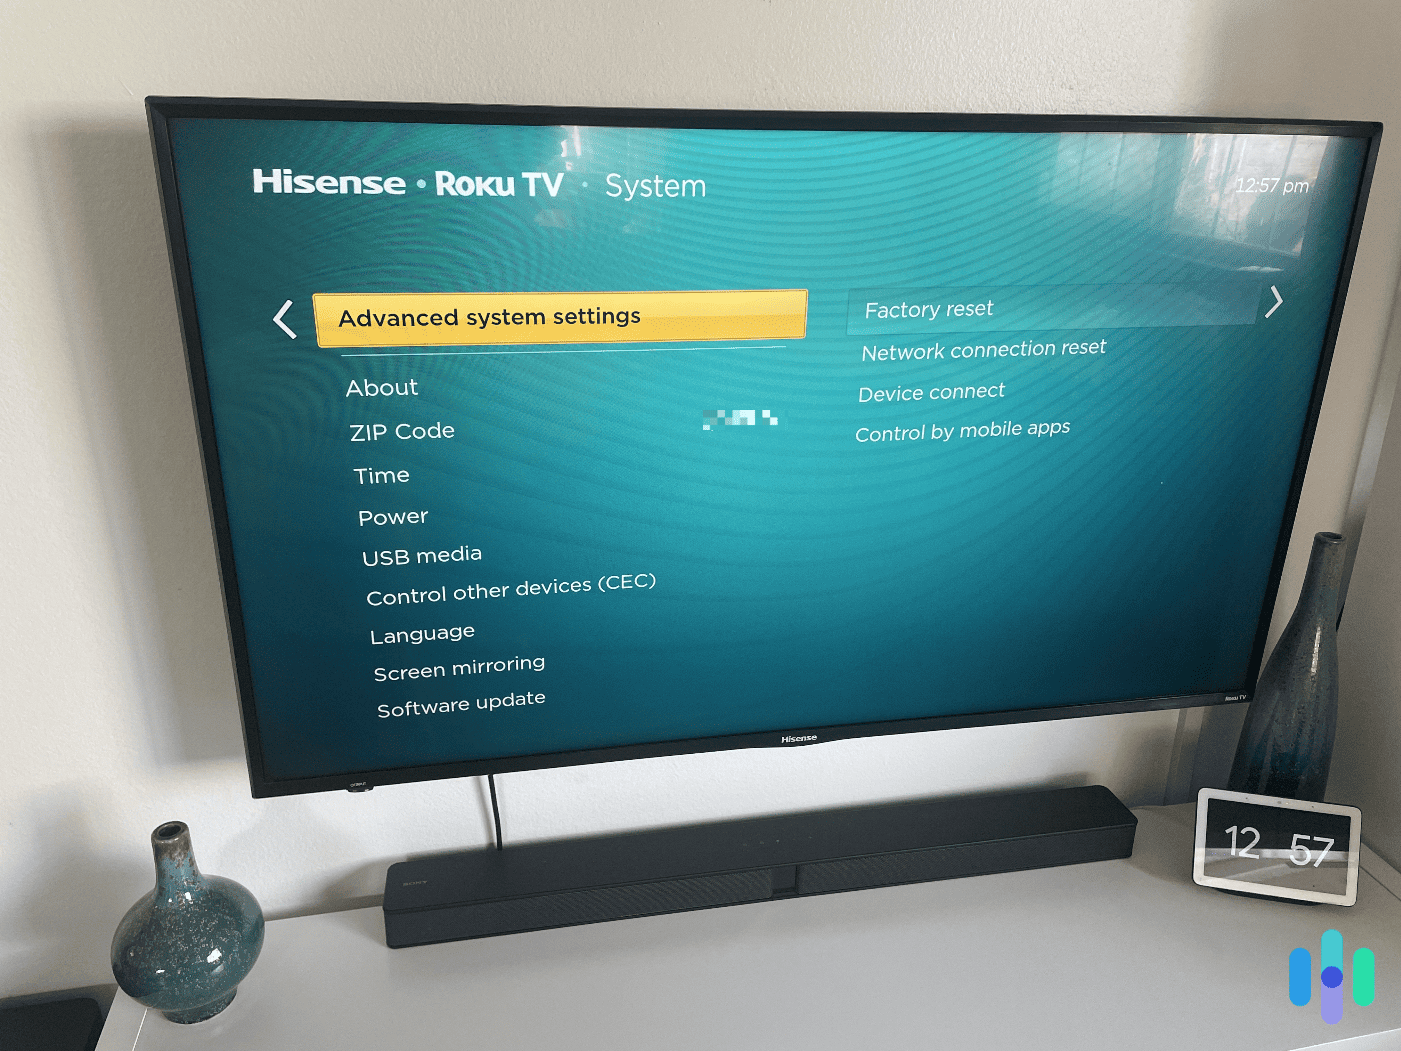 Roku TV's Advanced system settings